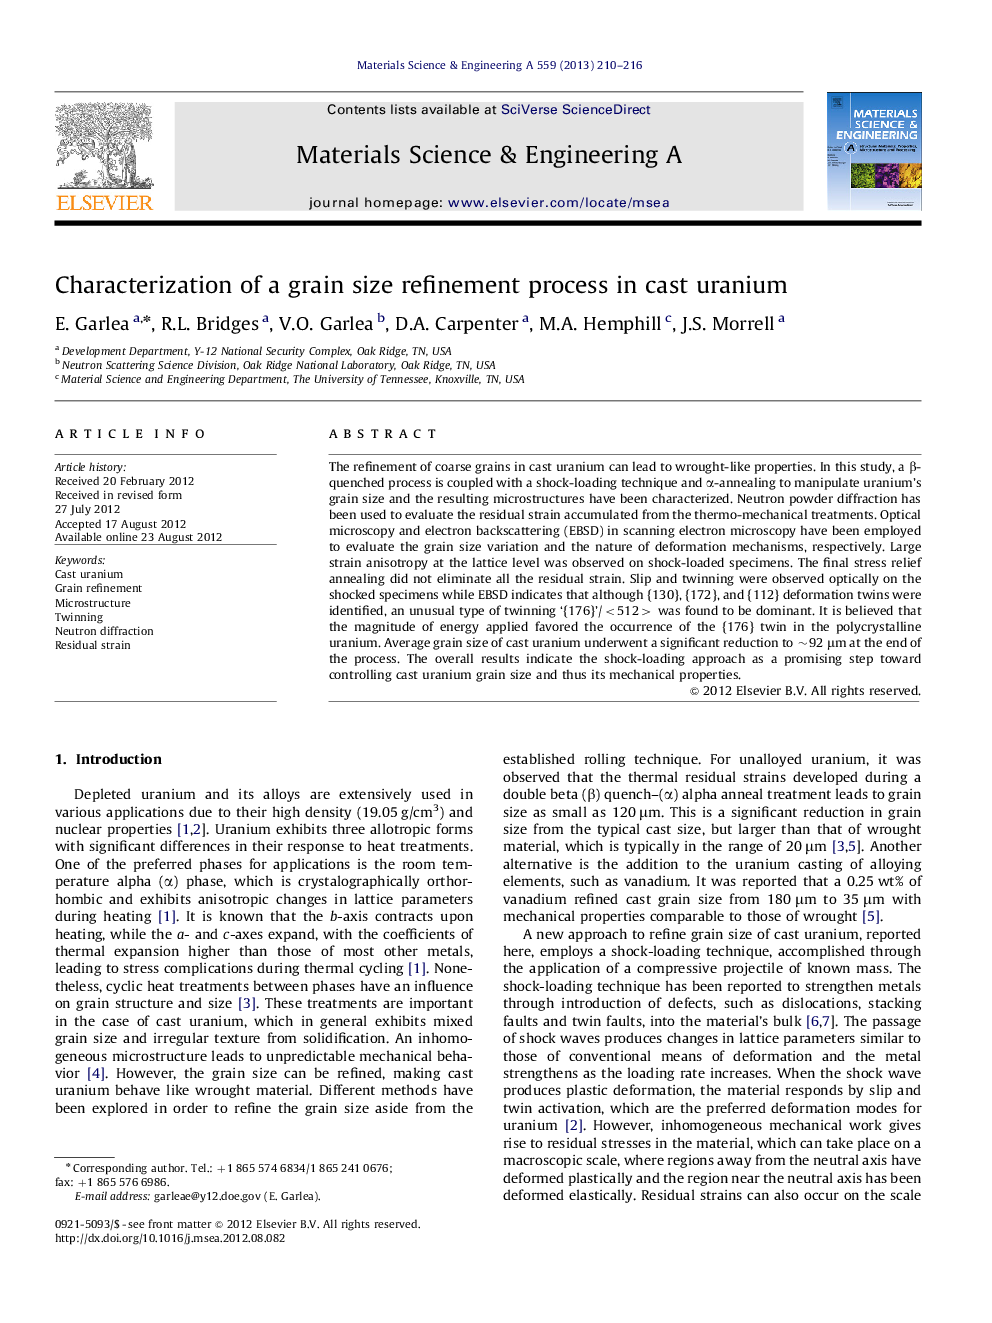 Characterization of a grain size refinement process in cast uranium